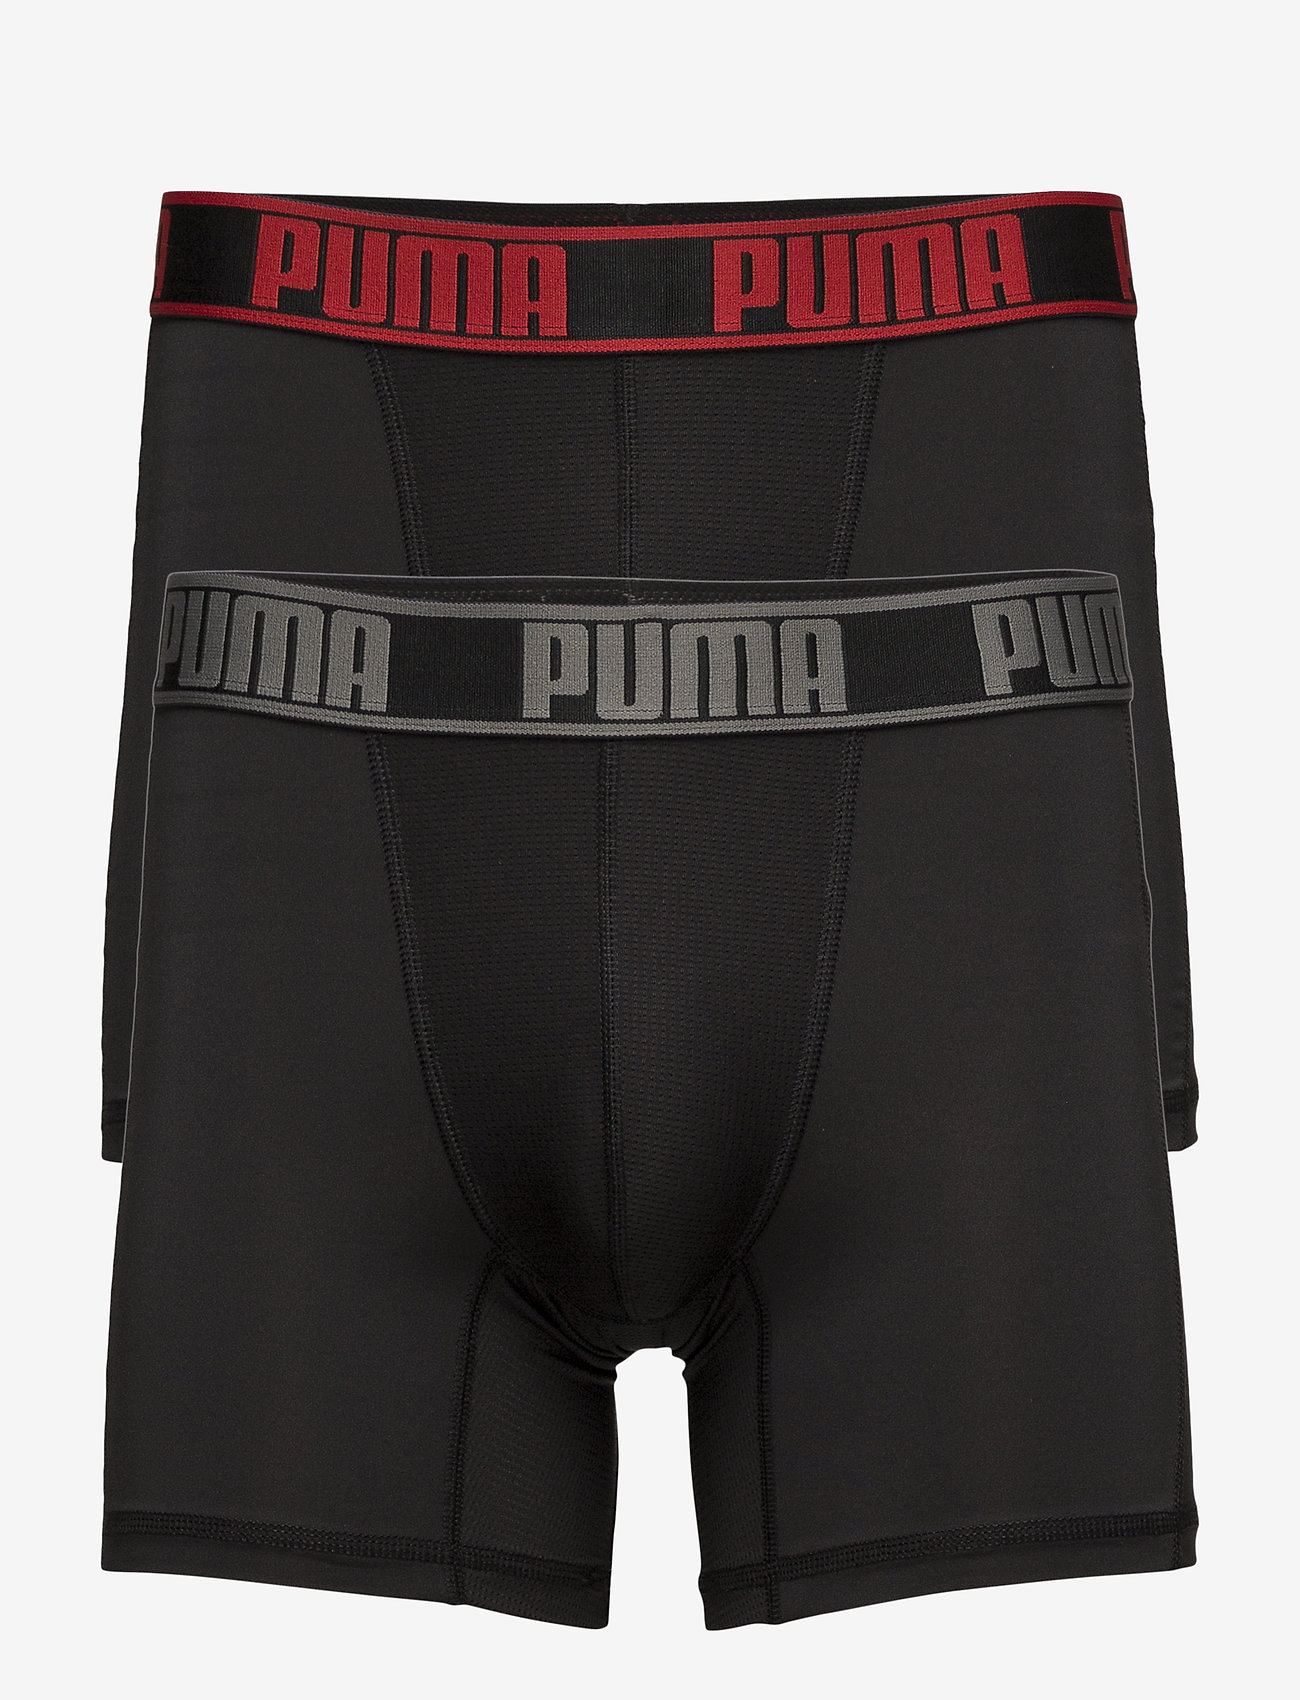 puma active boxers